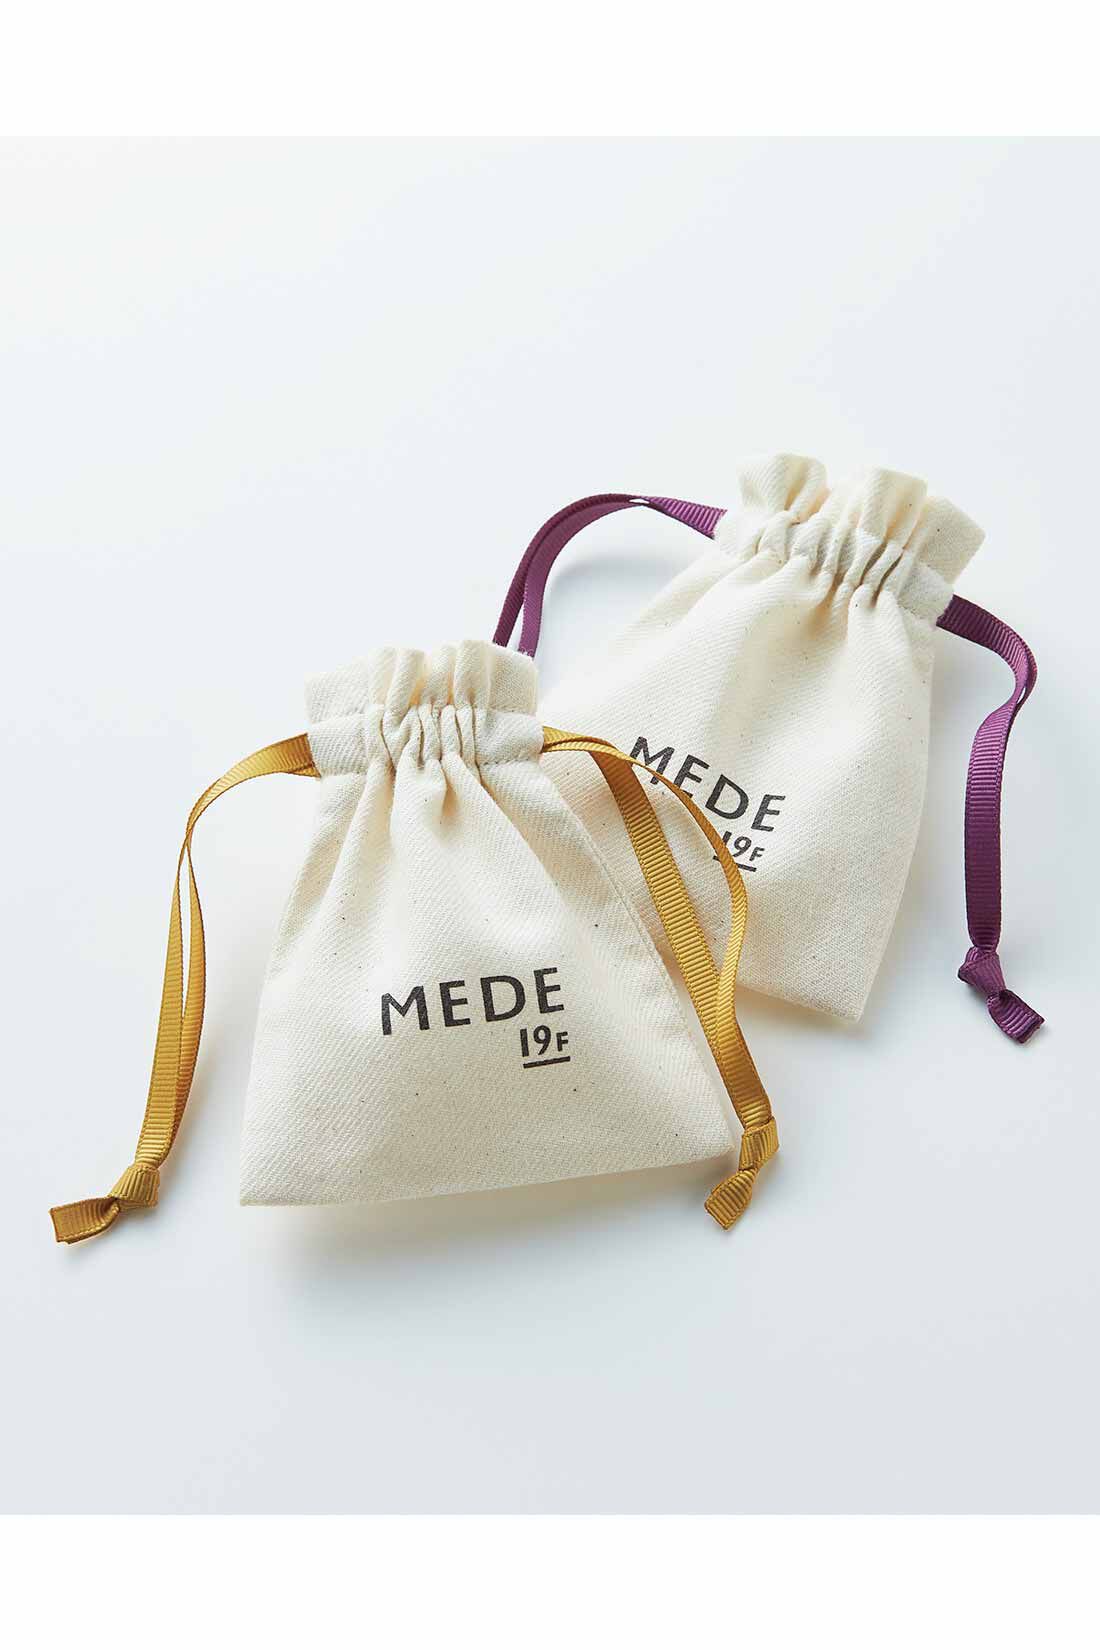 MEDE19F|YPAC for MEDE19F　フランス製陶器ボタンイヤリング type.20|MEDE19Fオリジナルきんちゃくに入れてお届けします。